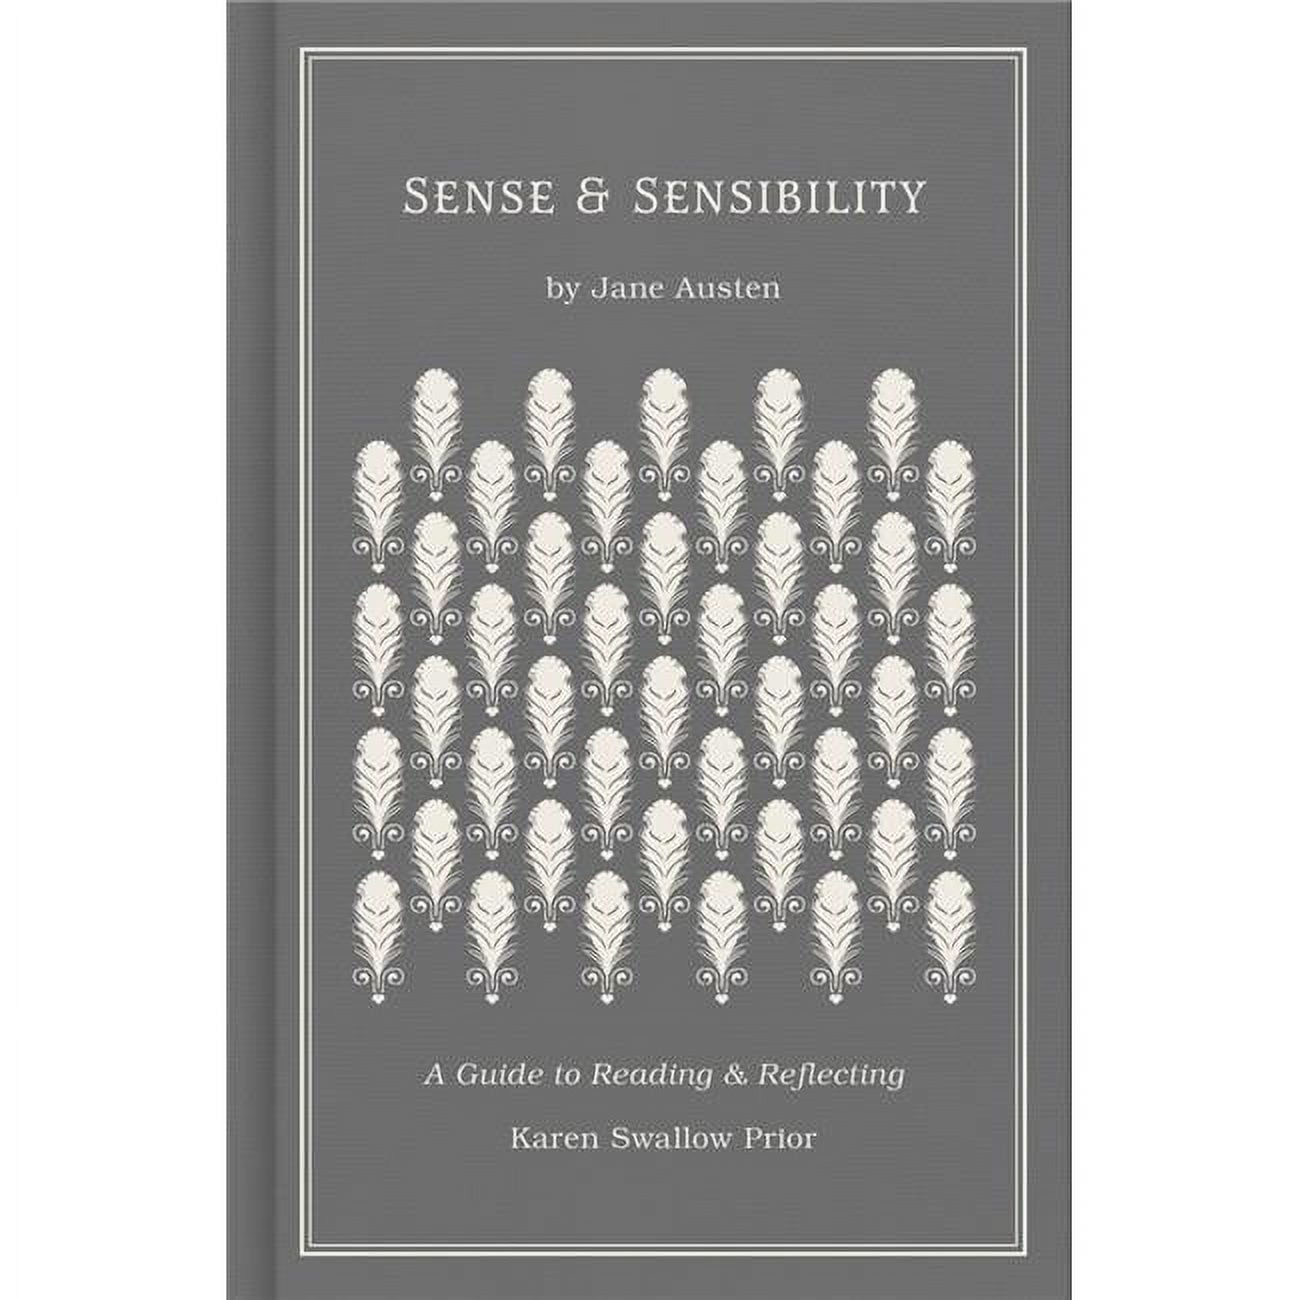 B & H Publishing 138937 Sense & Sensibility Reflection & Guide - Mar 2020